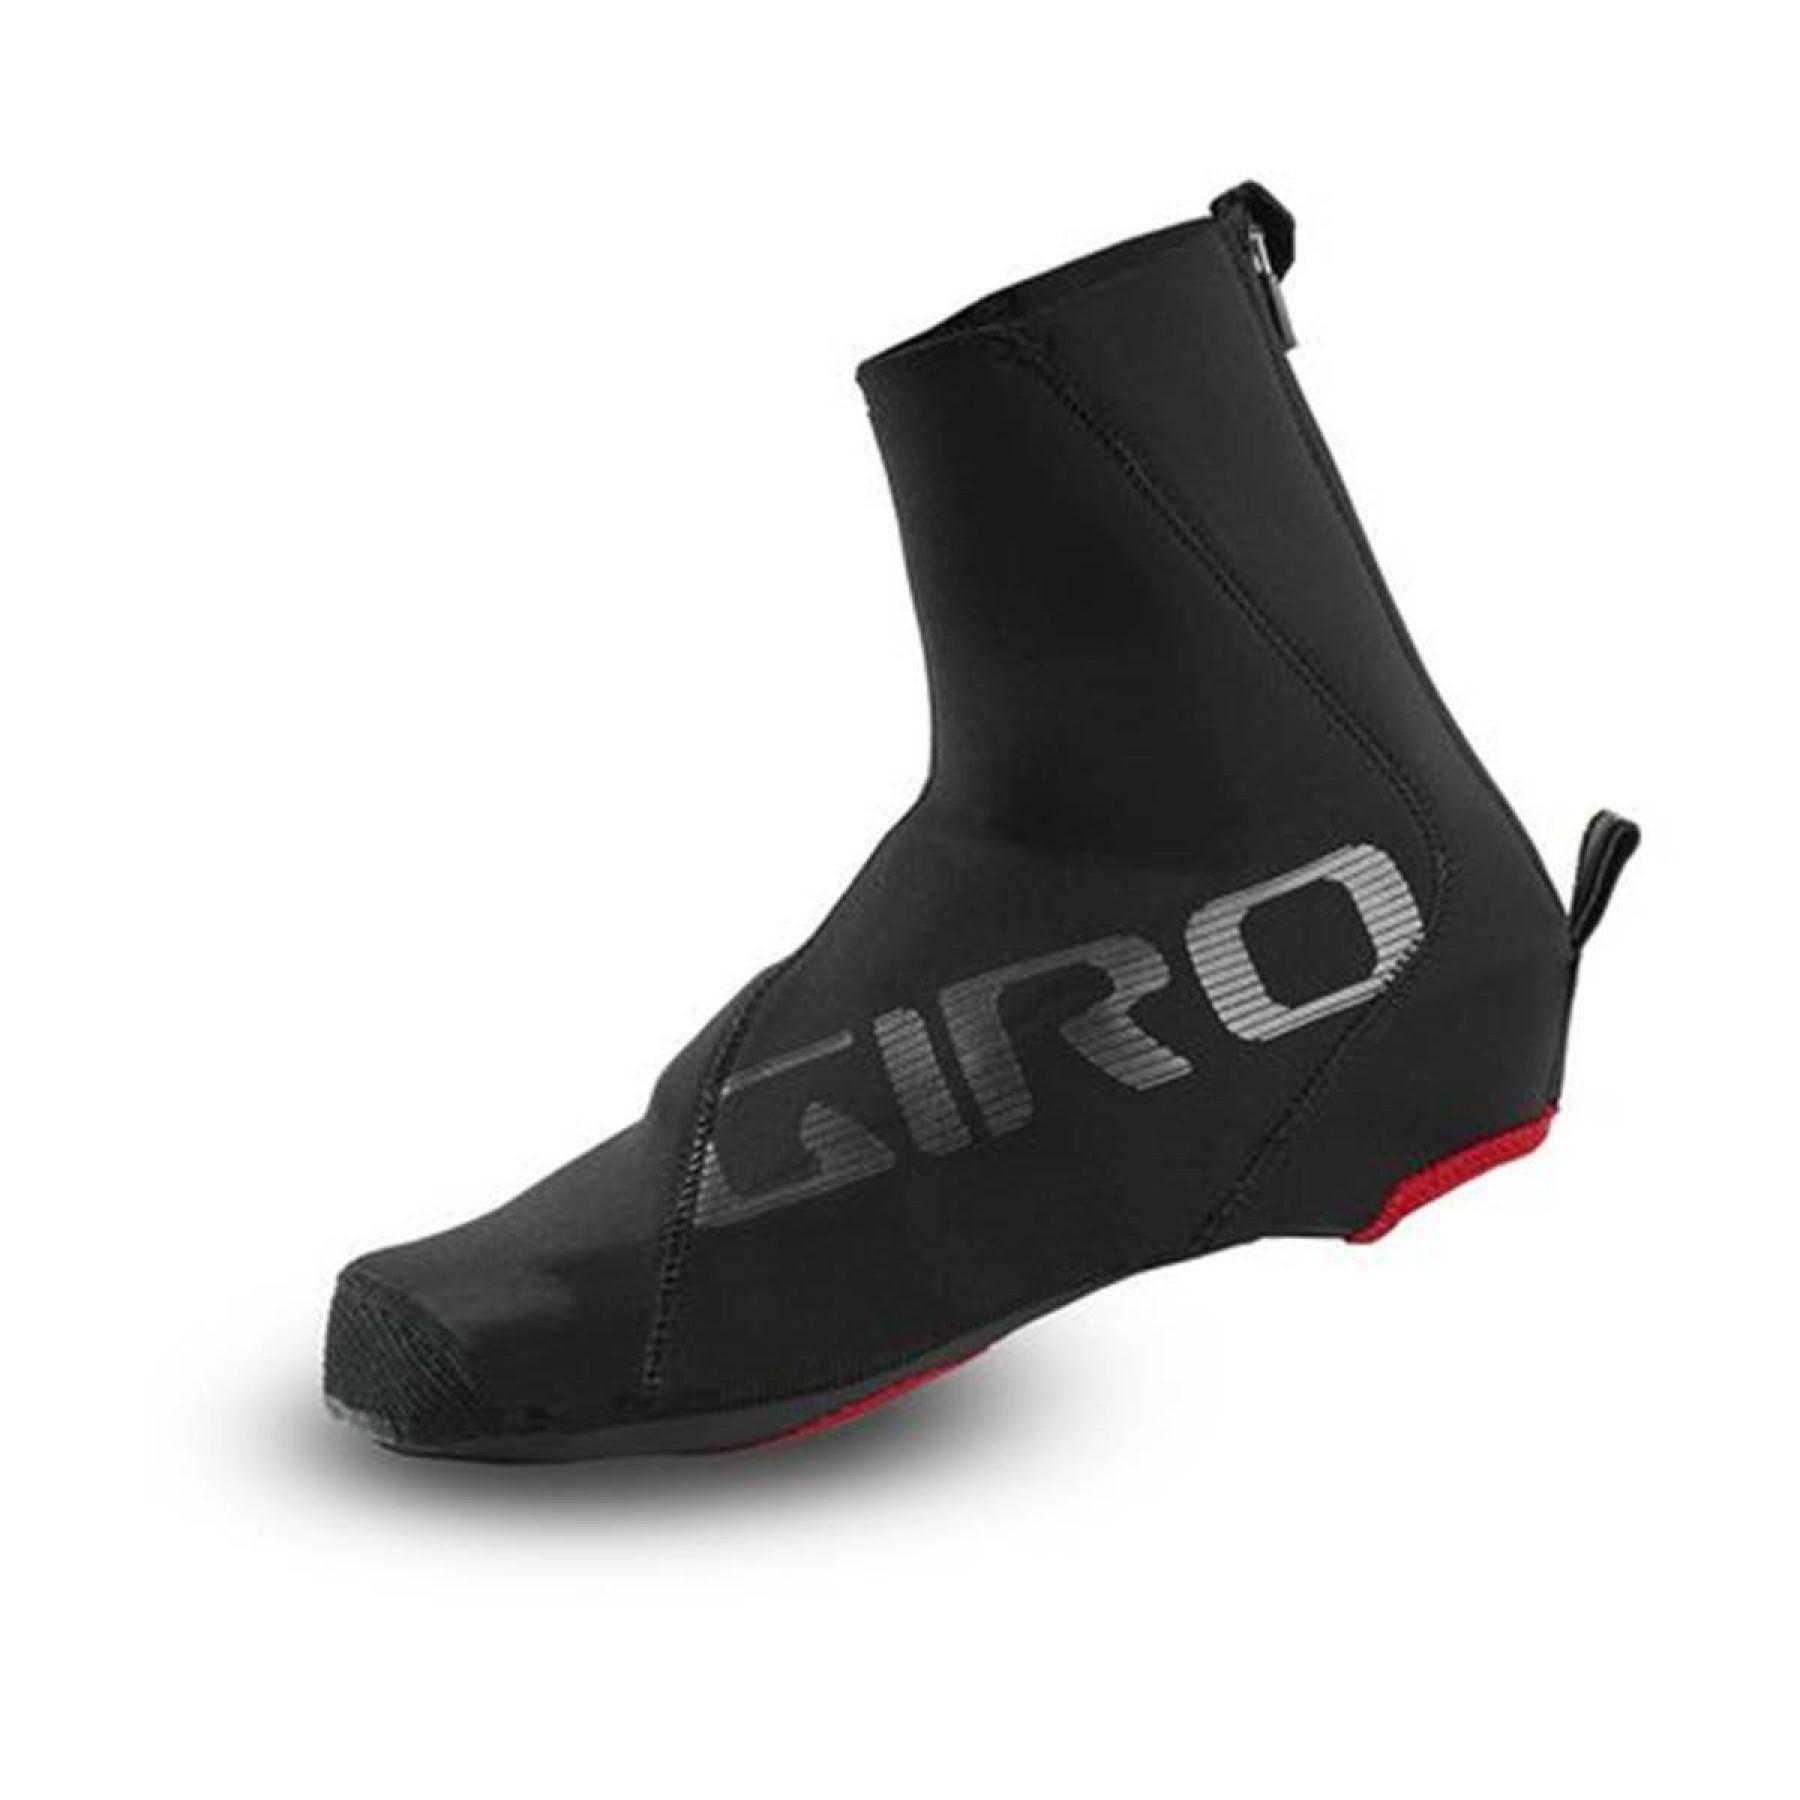 Fundas para zapatos Giro Proof Winter Shoe Cover